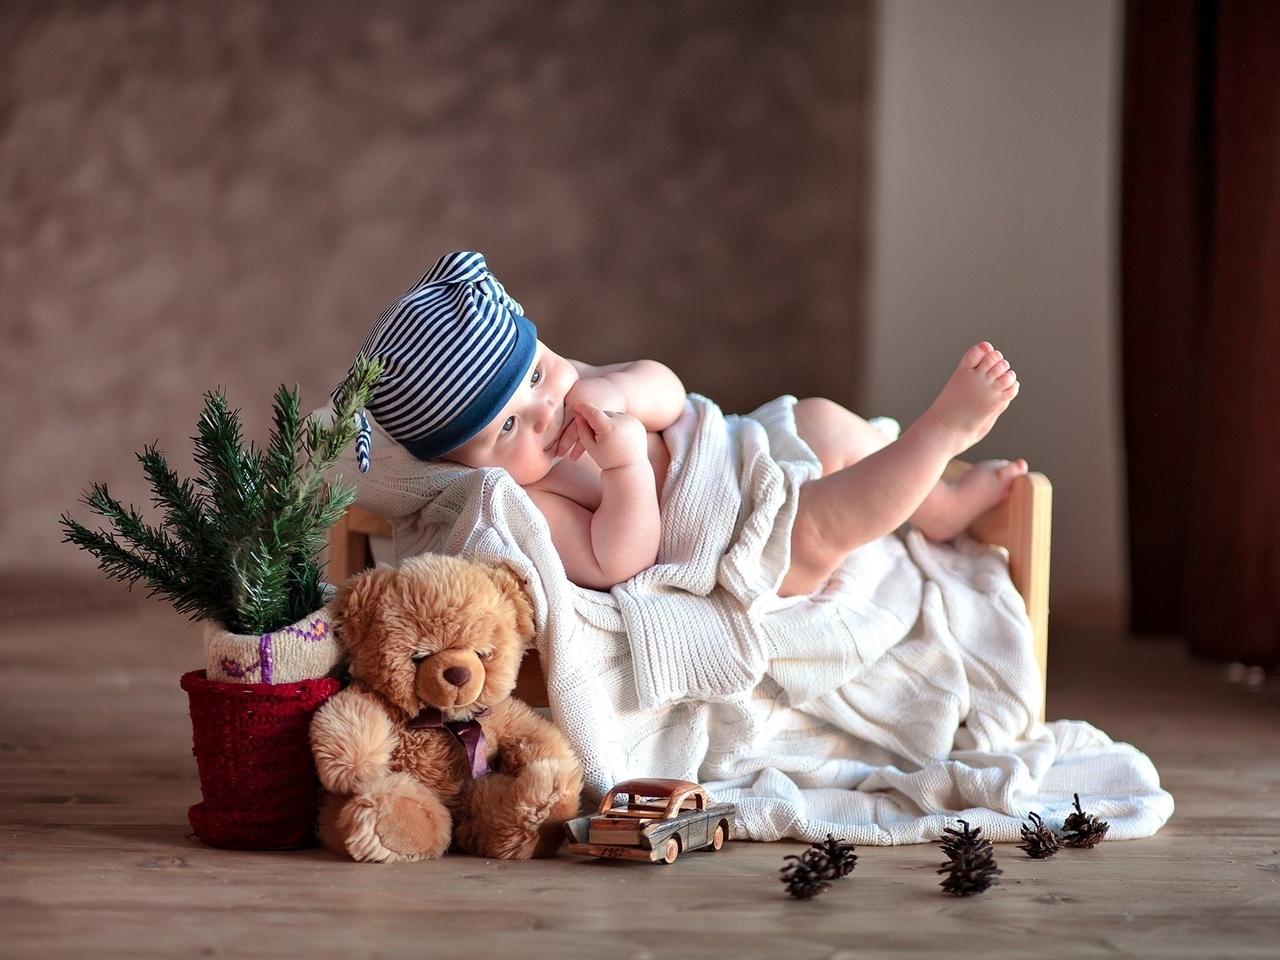 Image: Kid, child, toy, teddy bear, car, bumps